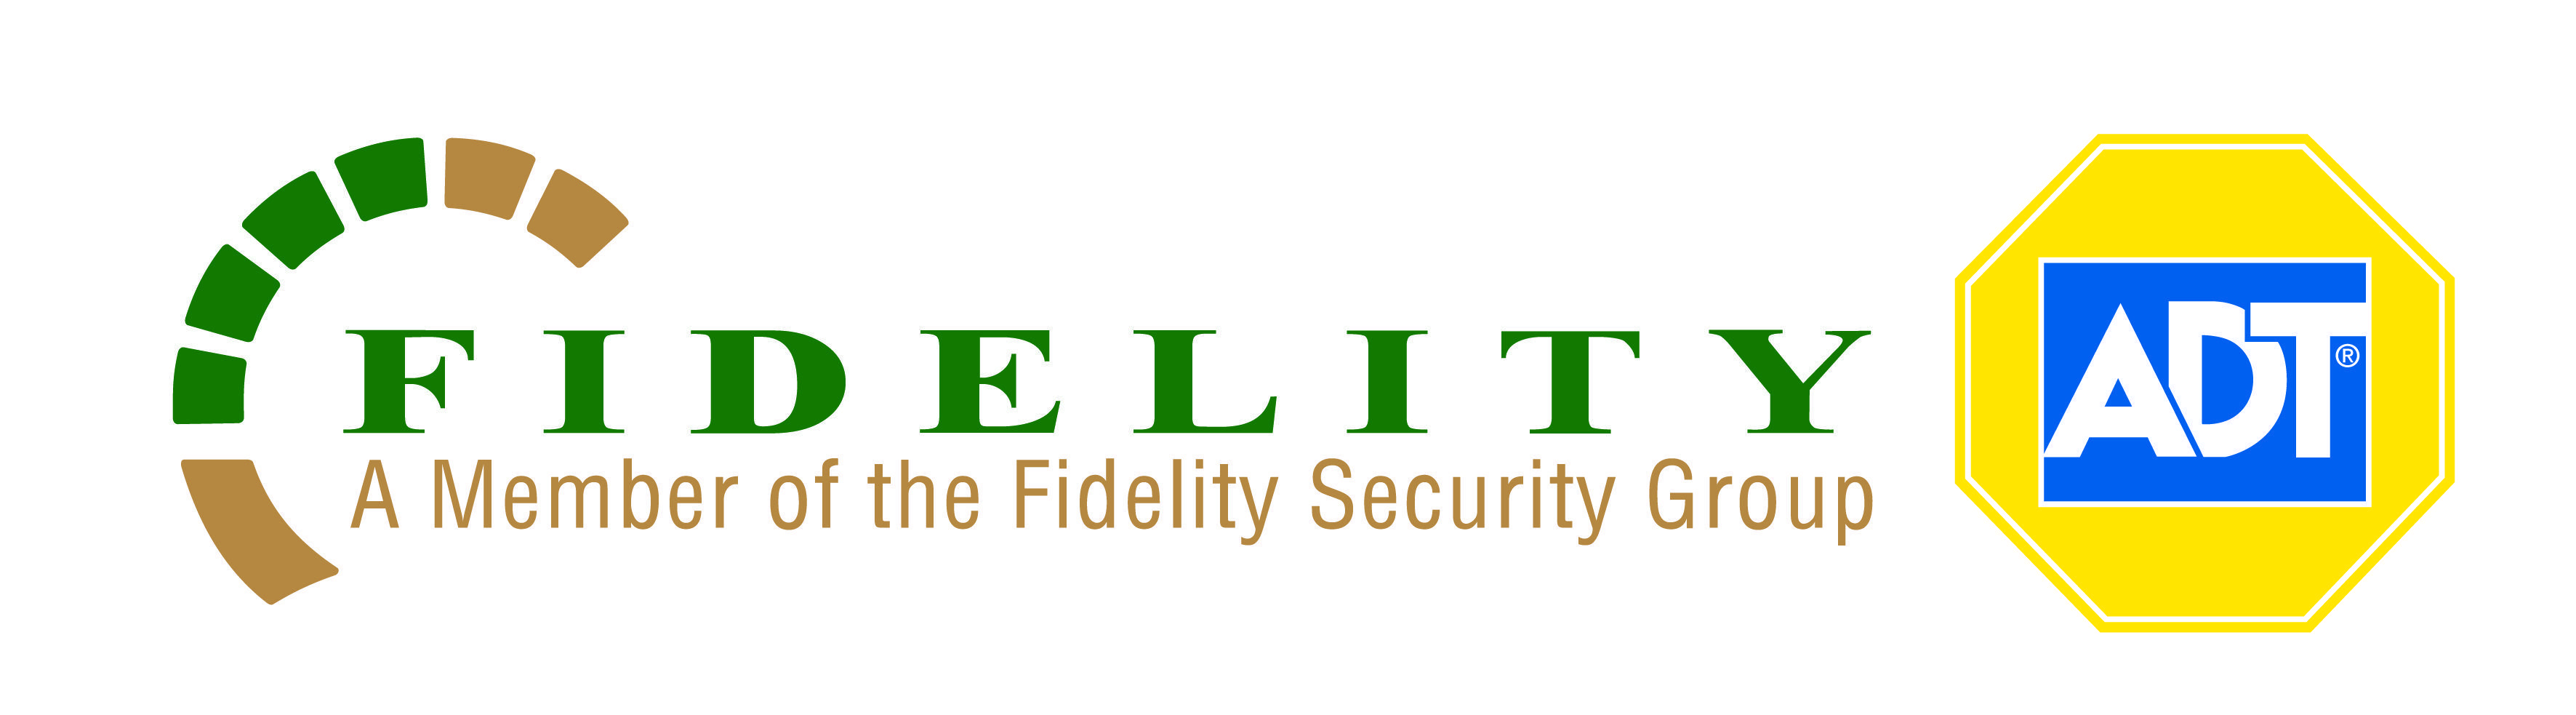 ADT Logo - Fidelity ADT logo 25-07-2017 – The Harfield Village Carnival